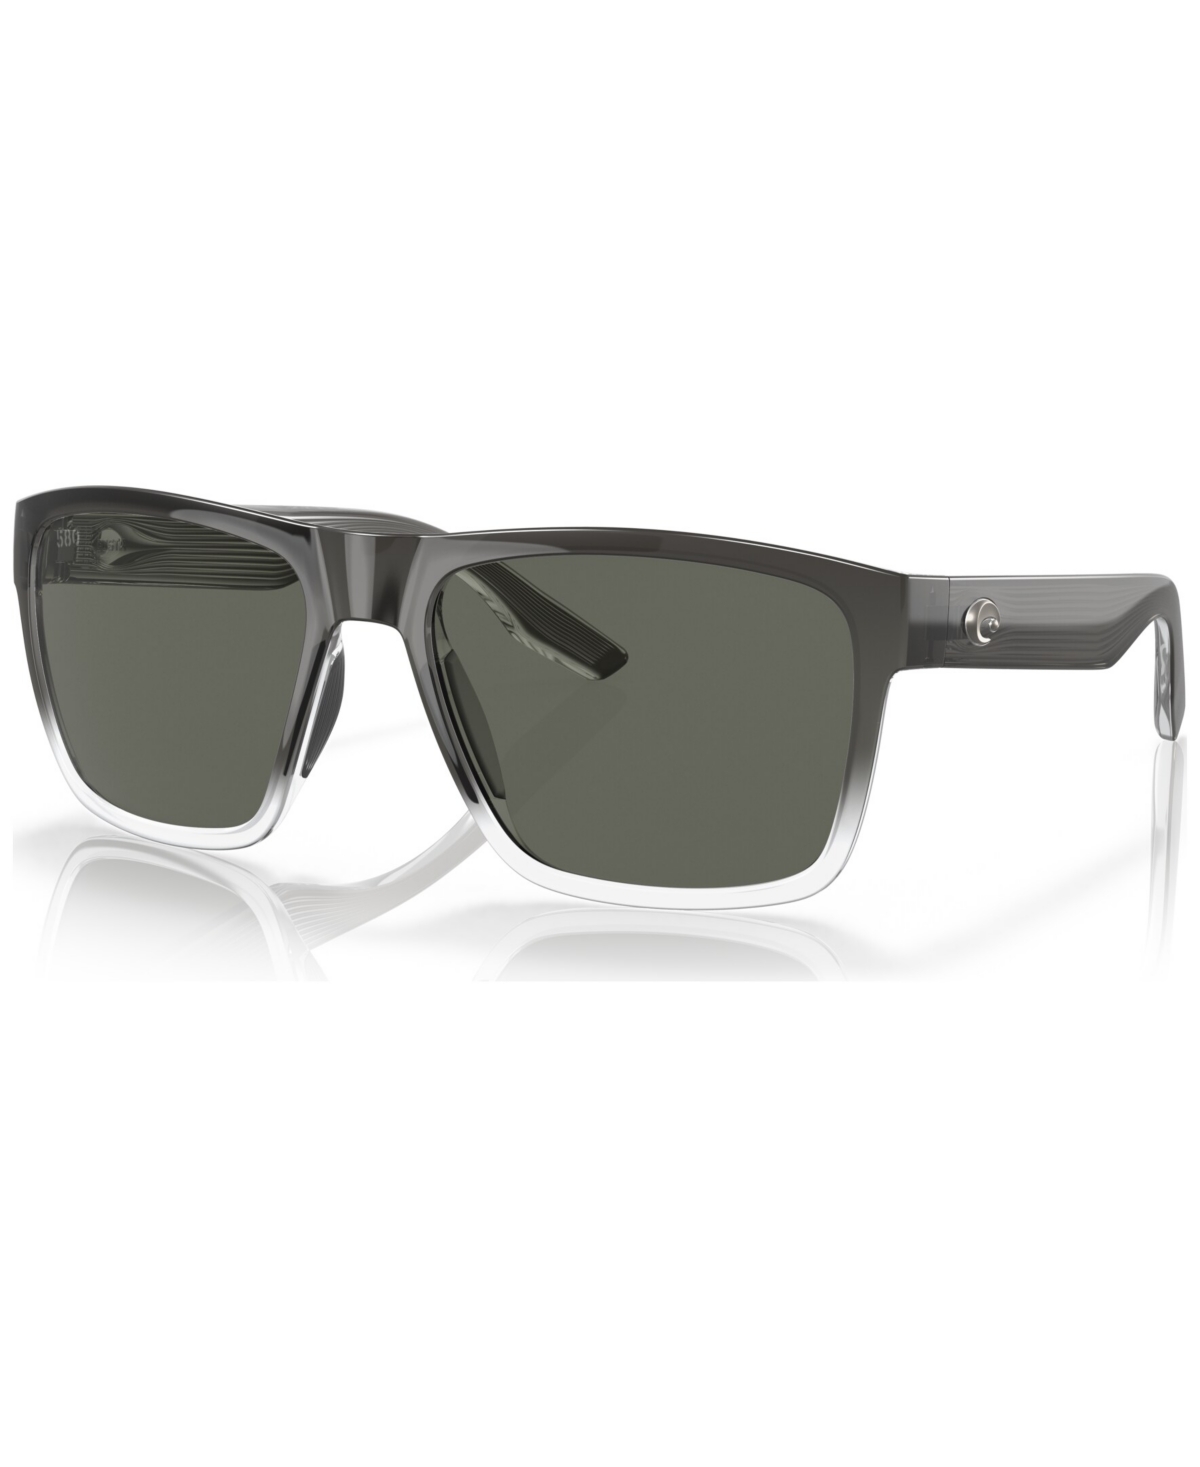 Men's Polarized Sunglasses, 6S905059-p - Fog Gray